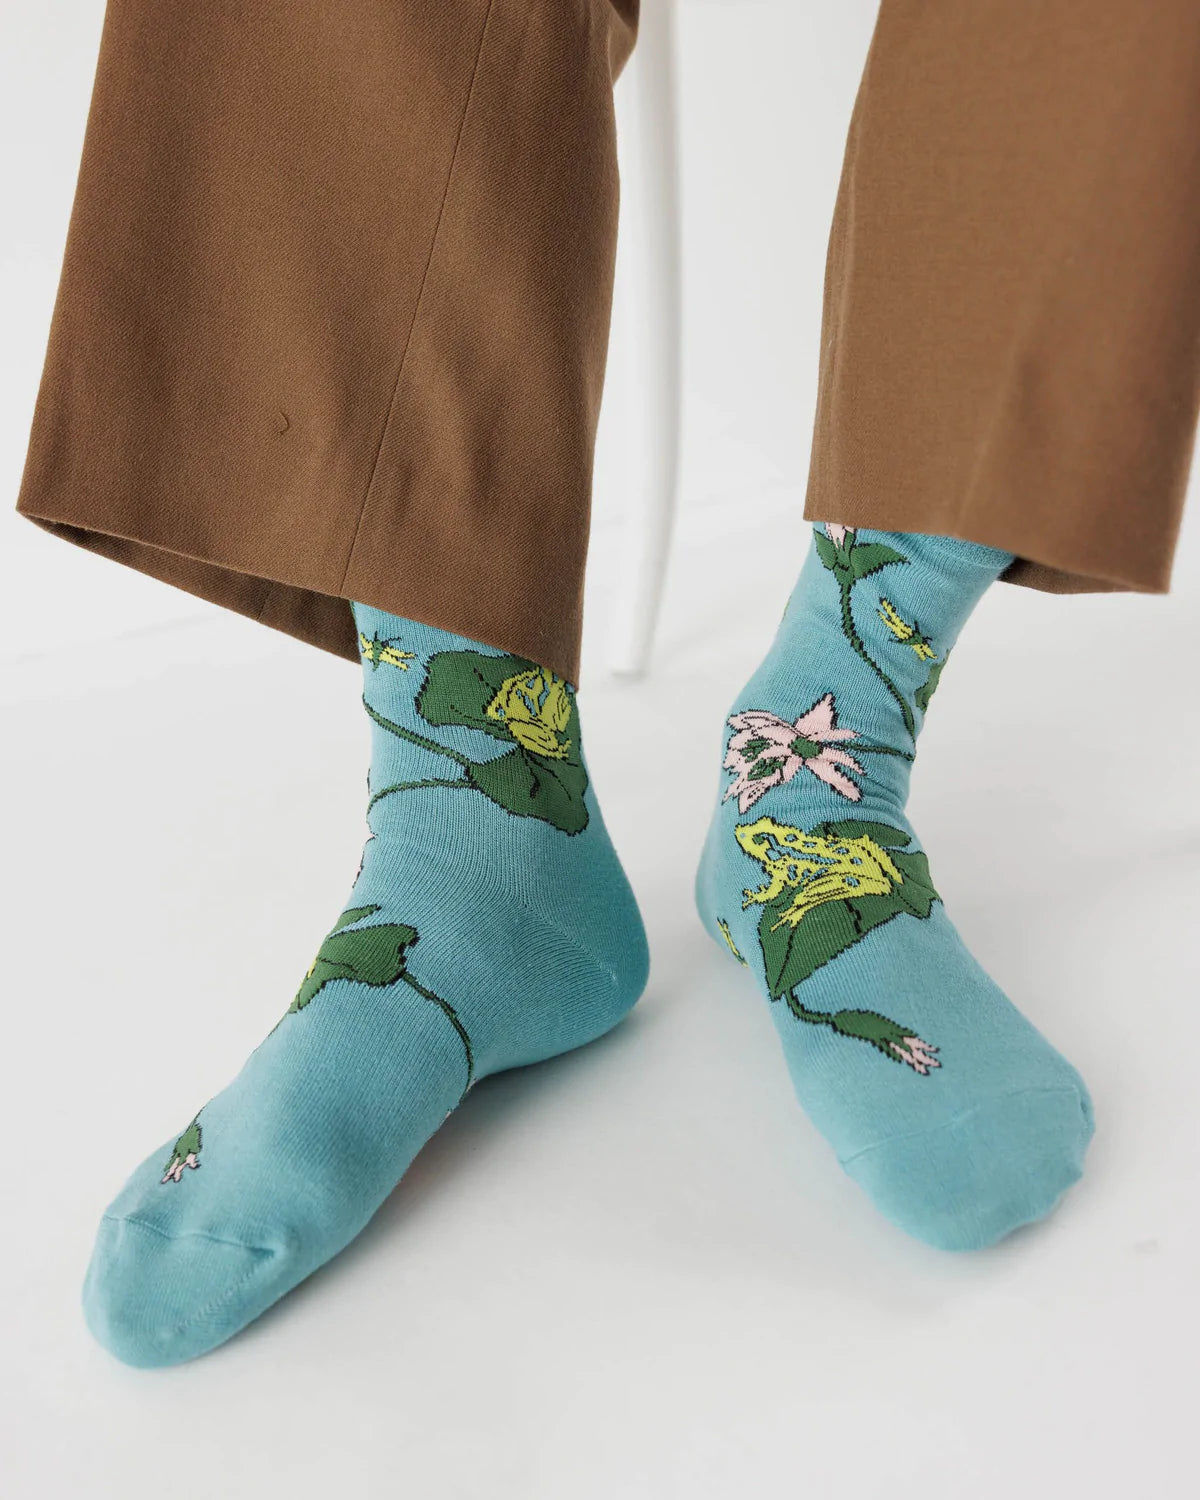 bamboo sof socks from baggu in lotus frog pattern